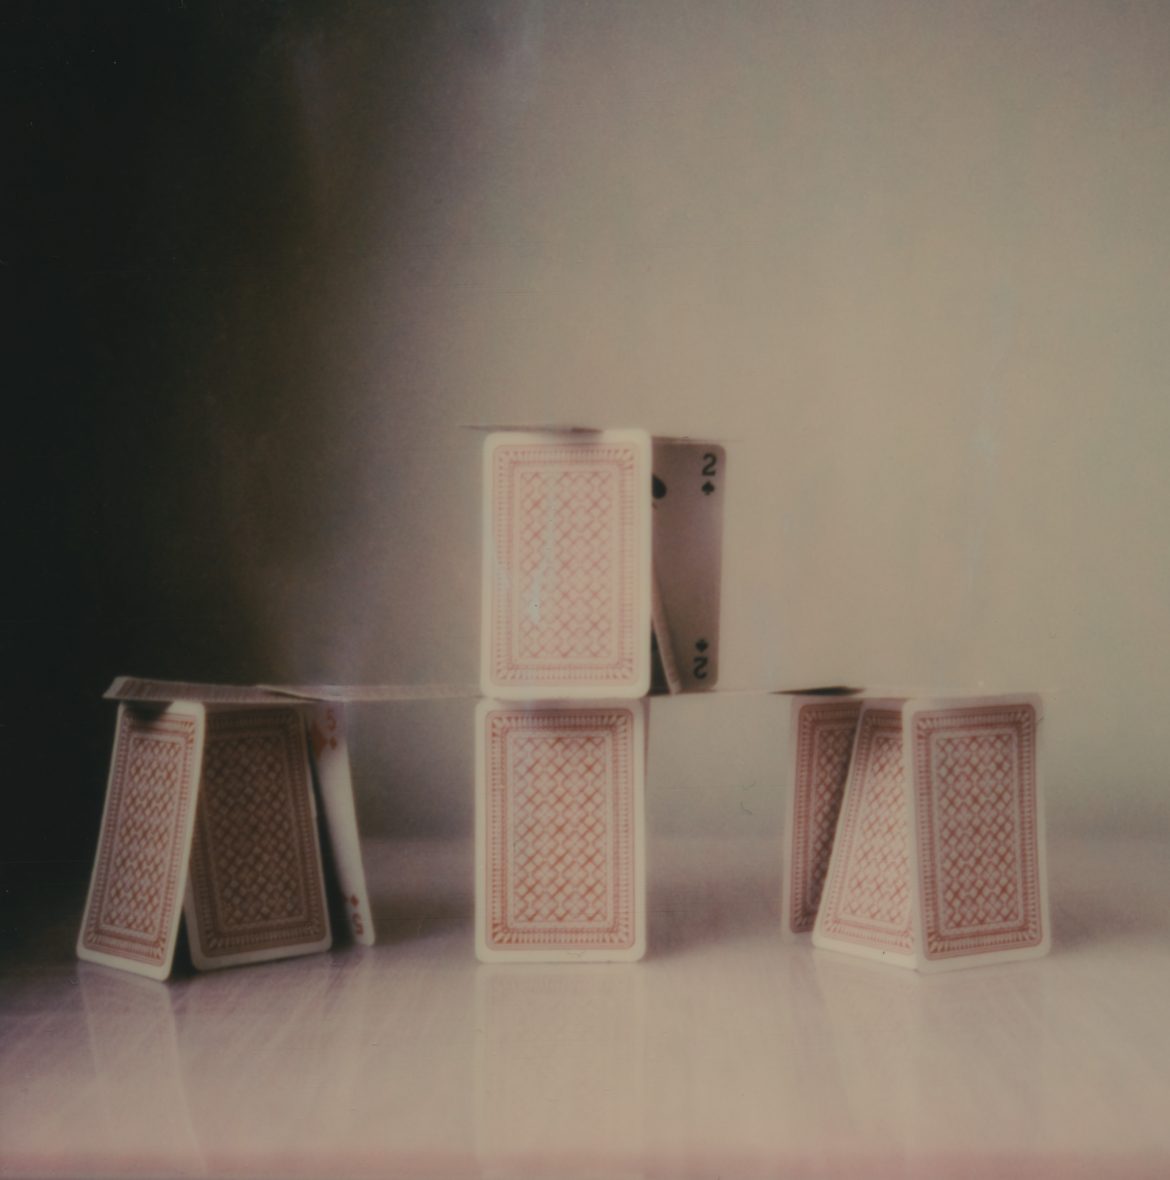 Château de cartes, polaroid, 2019